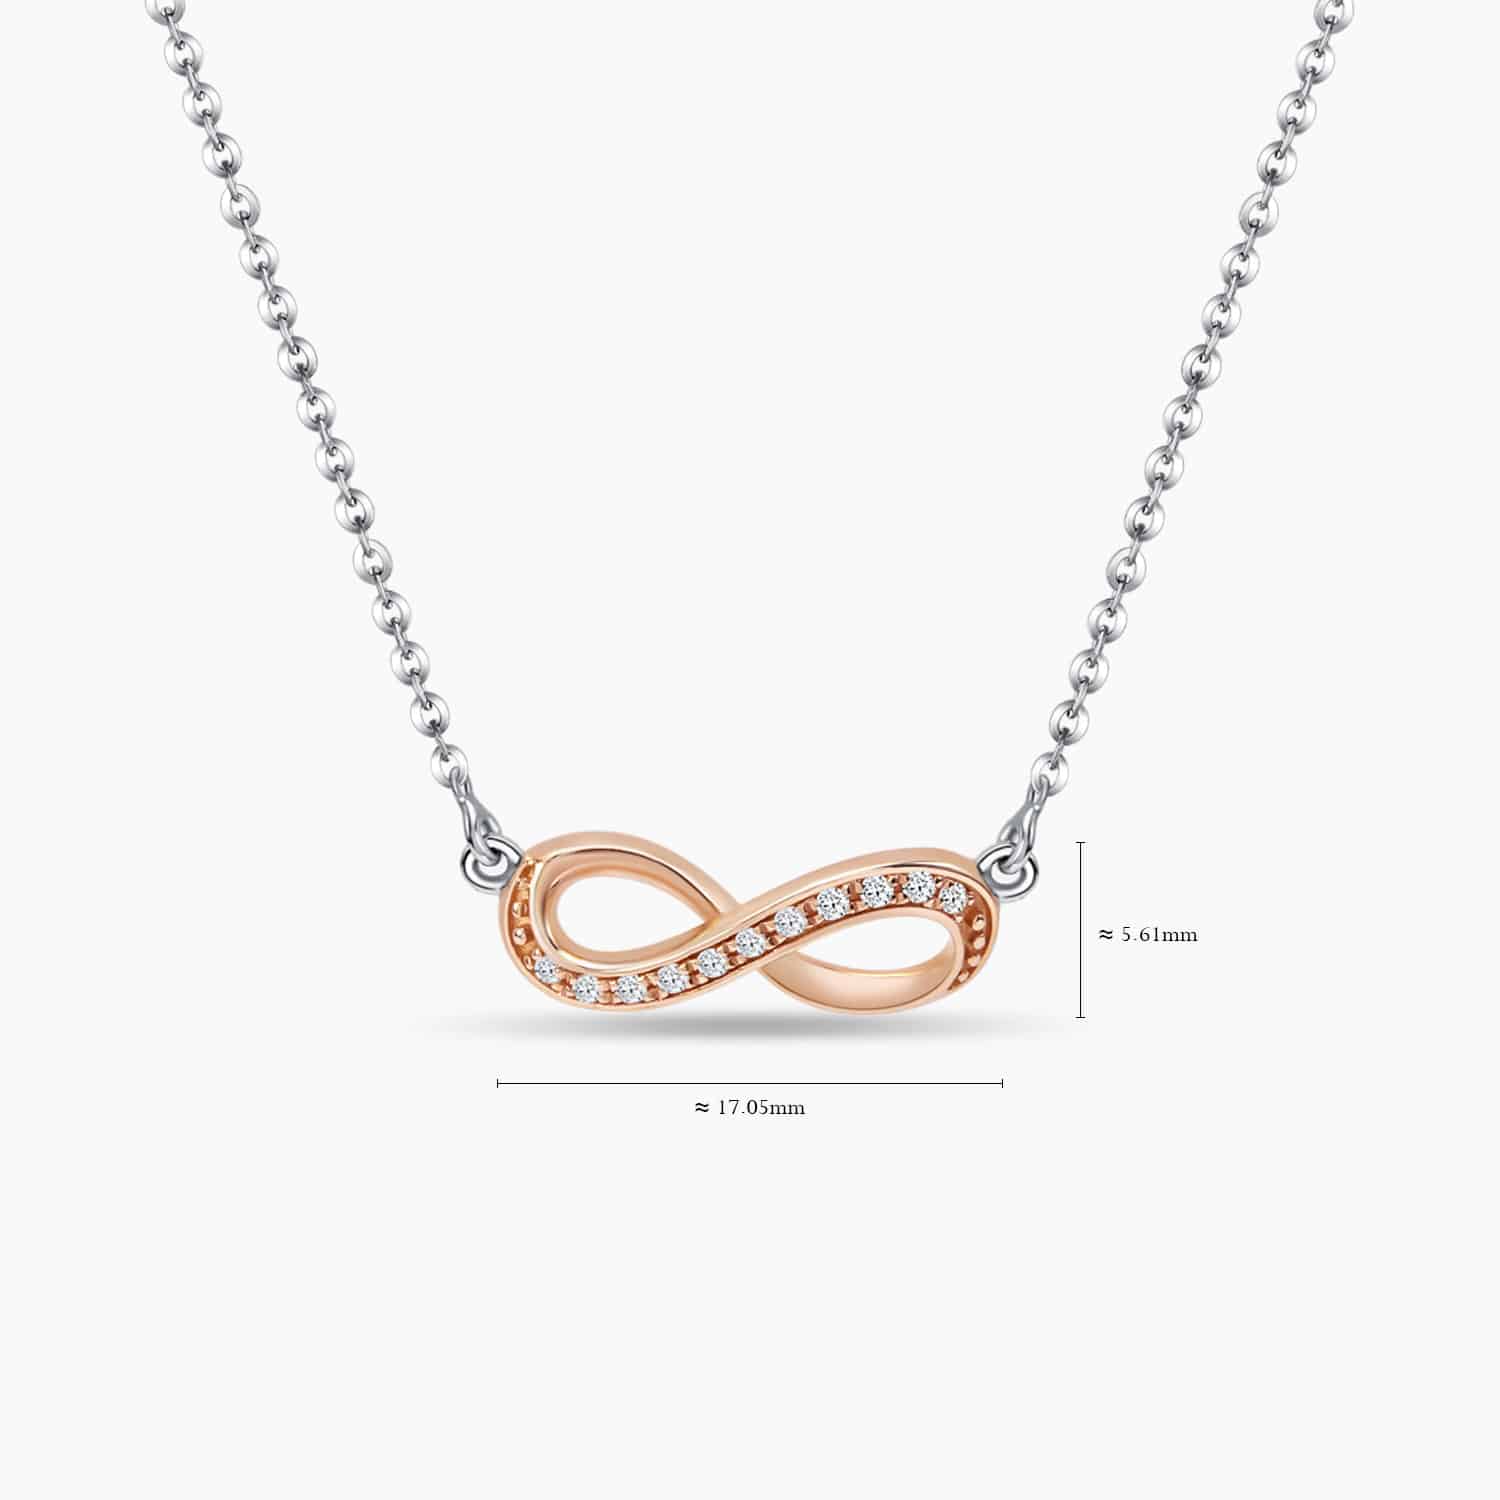 LVC Destiny Infinity Diamond Necklace in 18K White Gold/Rose Gold & 11 Diamonds.